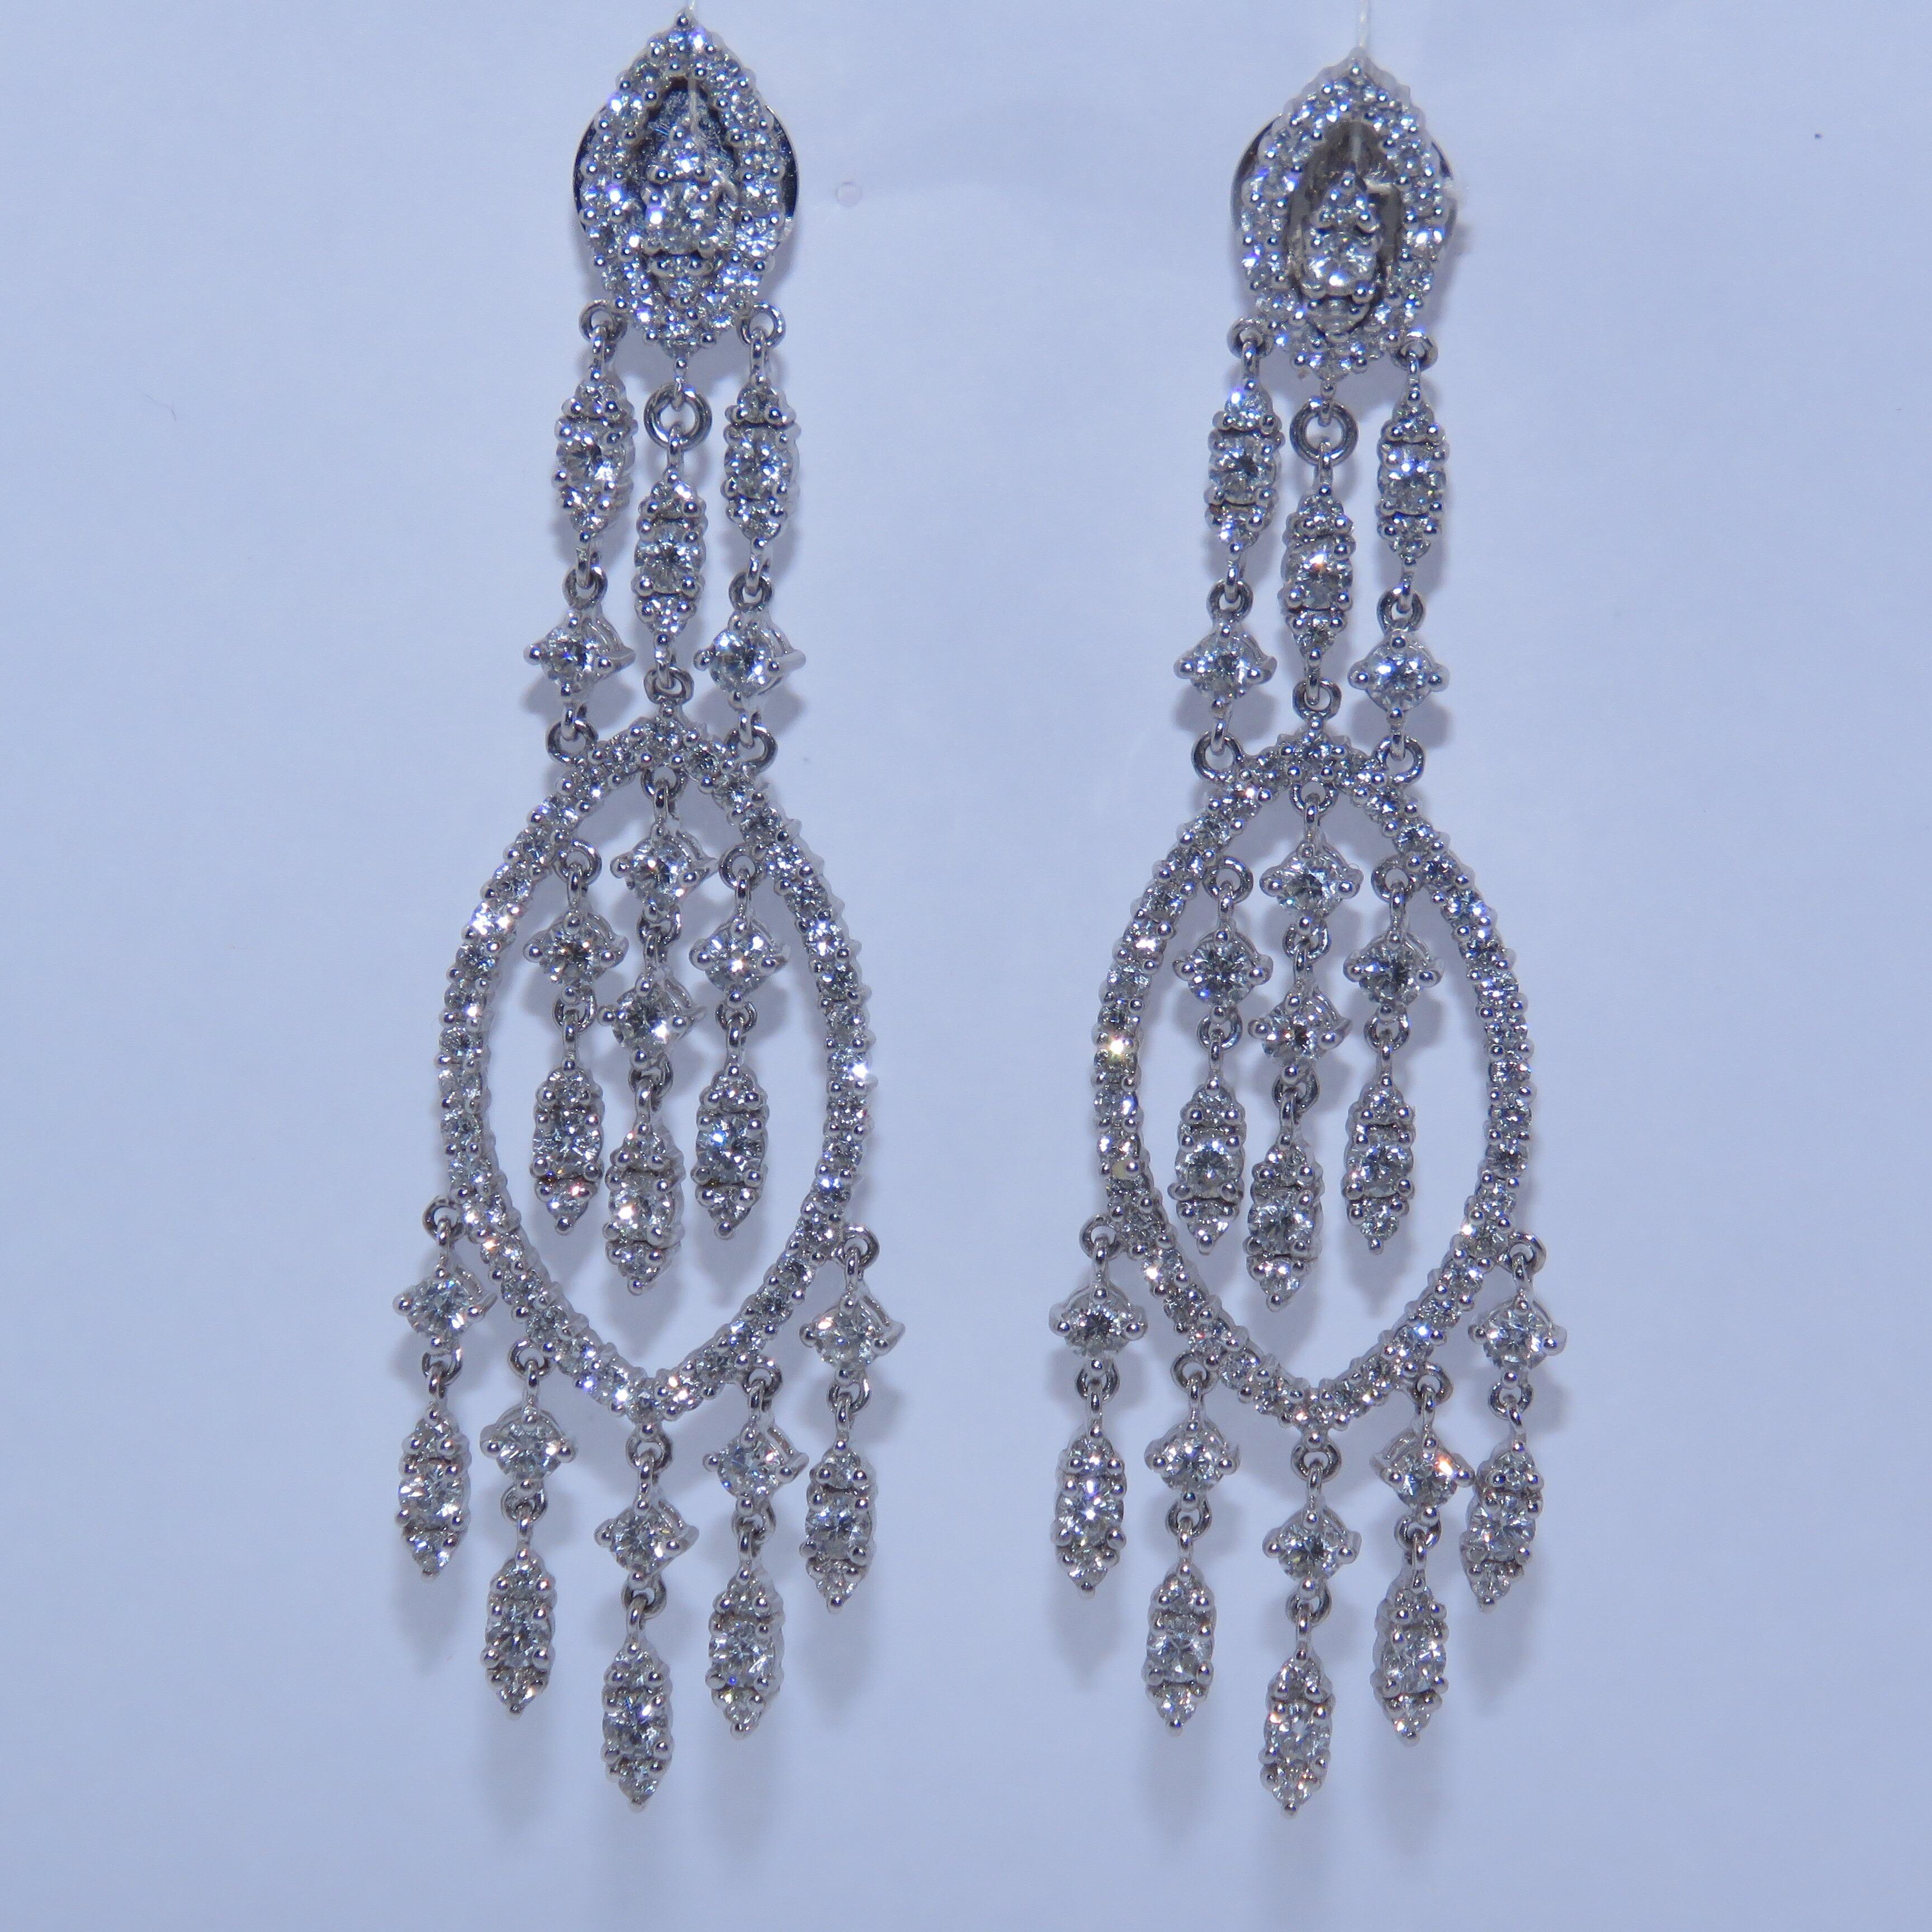 Diamond Chandelier Earrings set in 18Kt White Gold
Diamonds 4.73 ct
